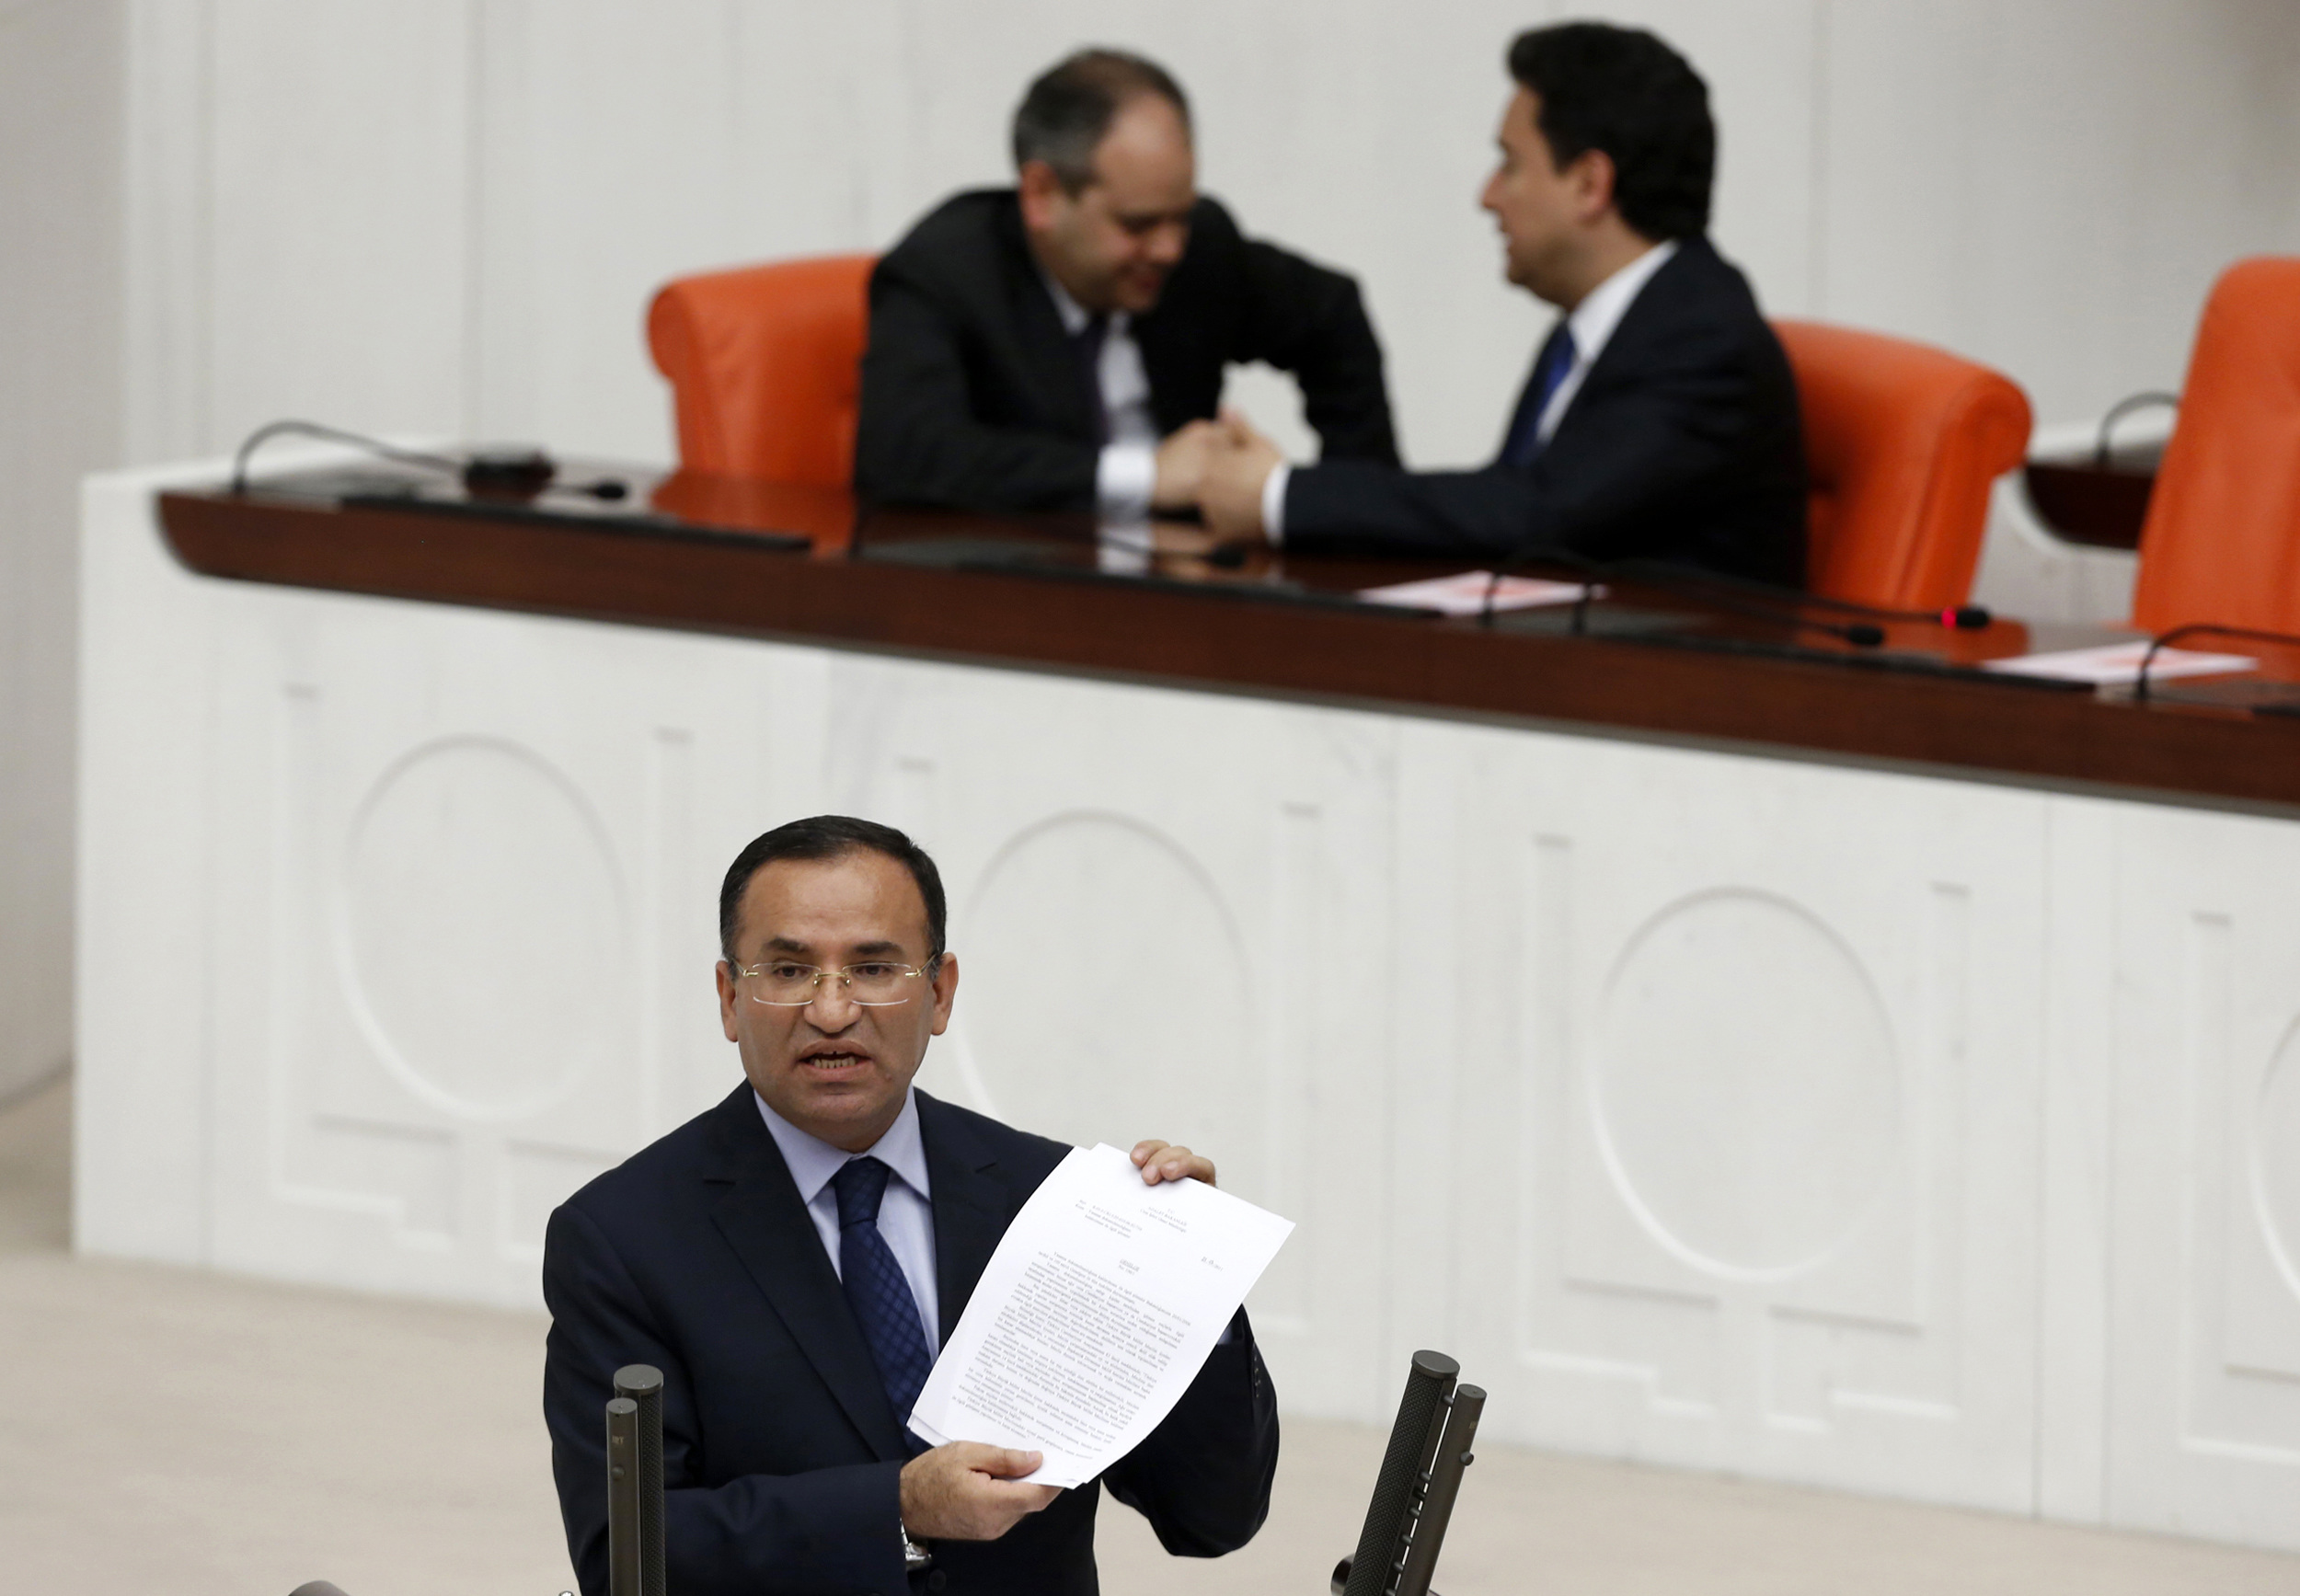 Justice Minister Bekir Bozdag addresses the Turkish Parliament during a debate in Ankara